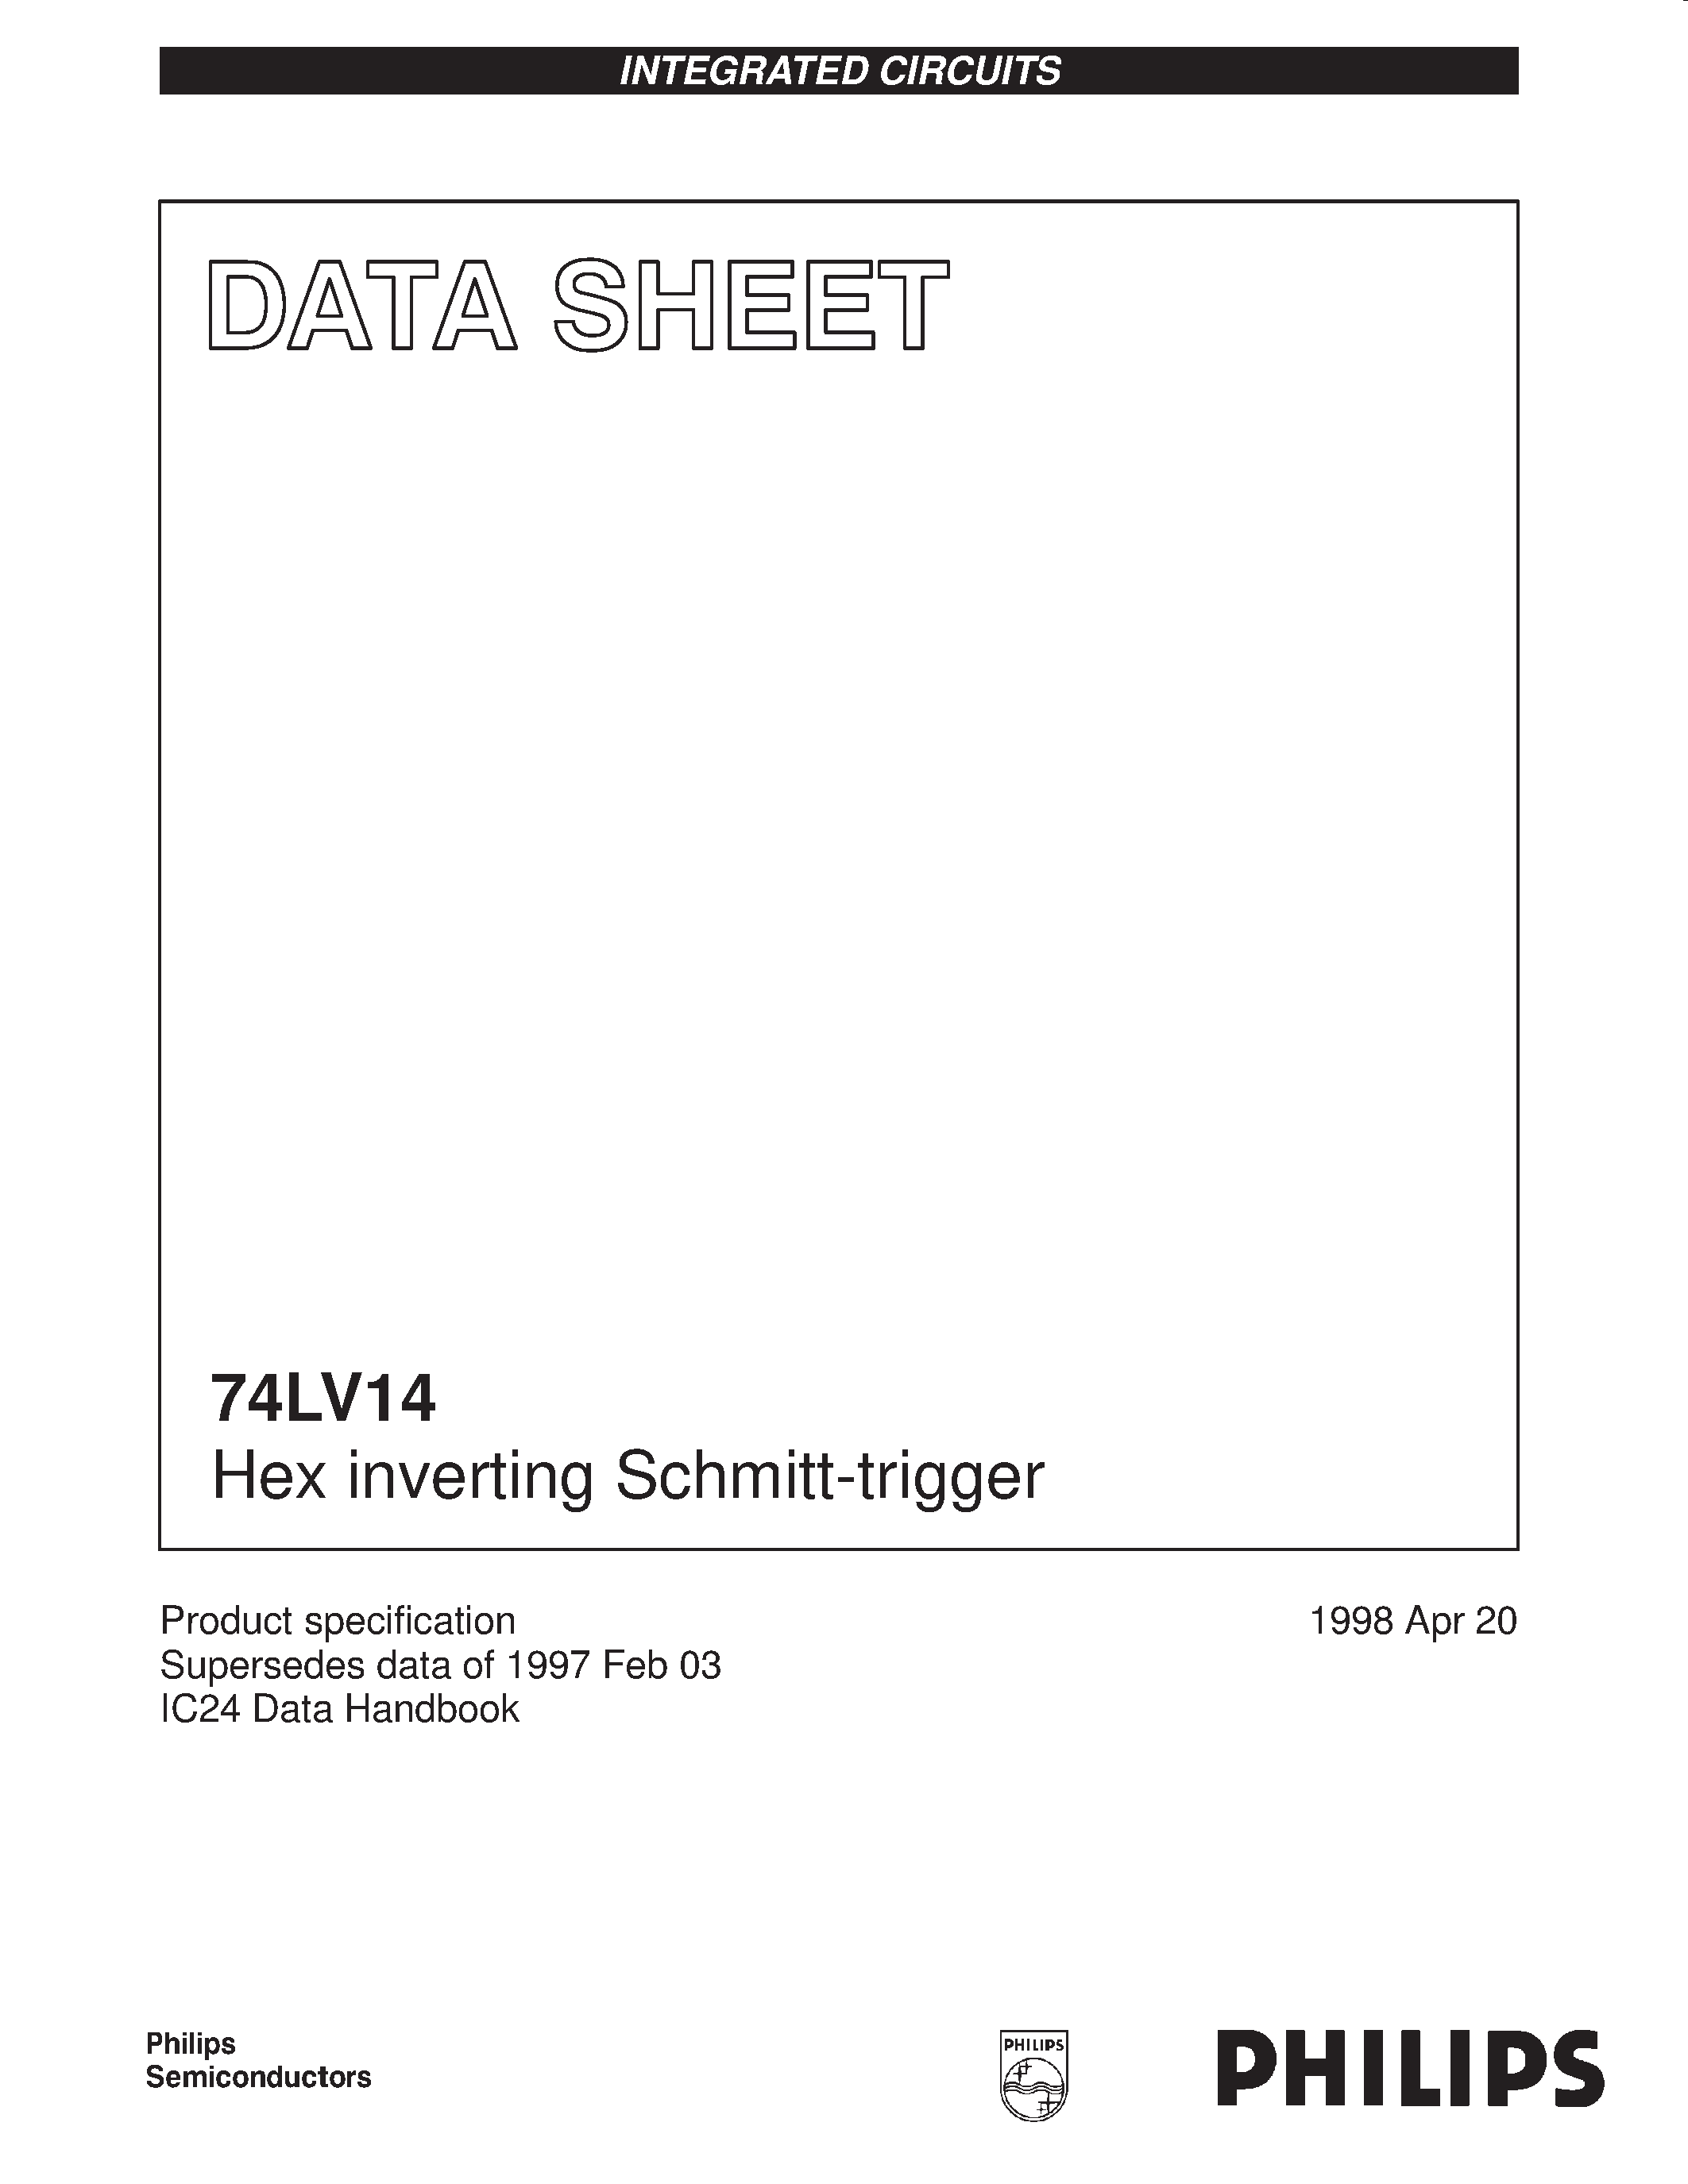 Datasheet 74LV14 - Hex inverting Schmitt-trigger page 1